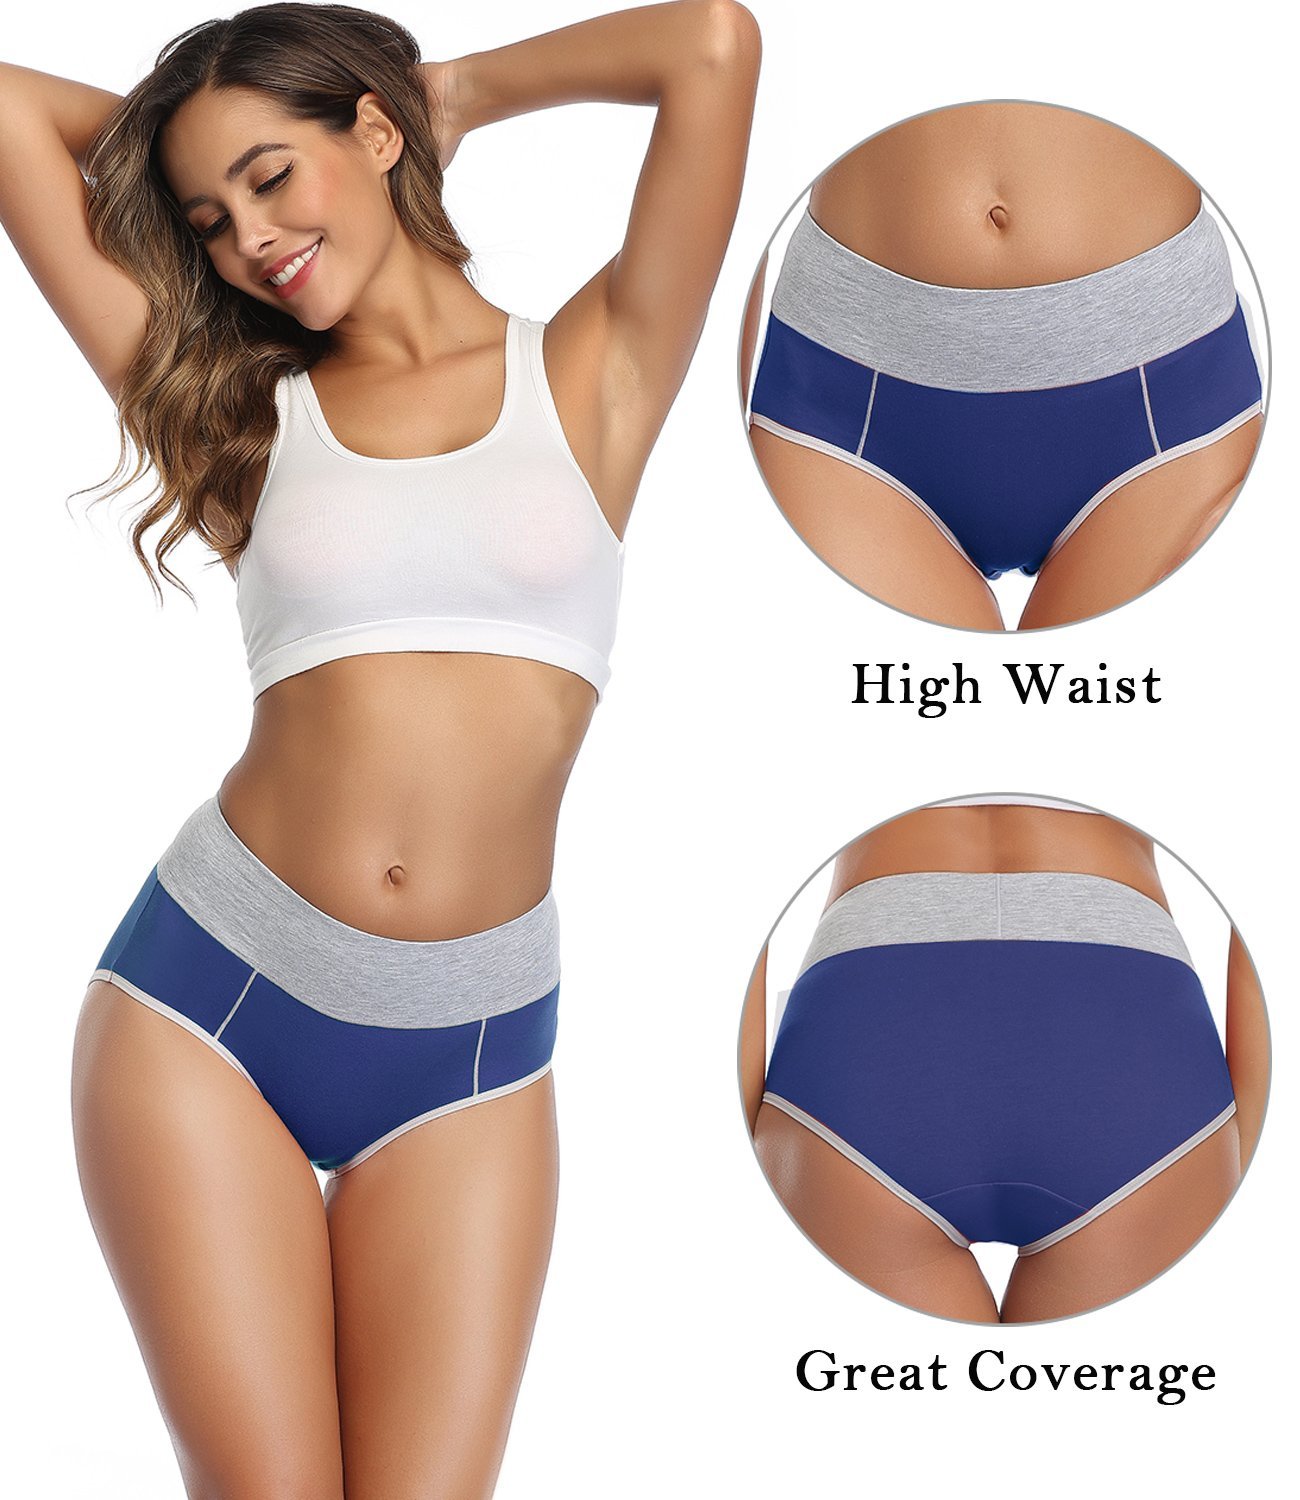  Wirarpa Womens Cotton Underwear High Waist Briefs Ladies  Soft Panties Full Coverage Underpants 5 Pack X-Large